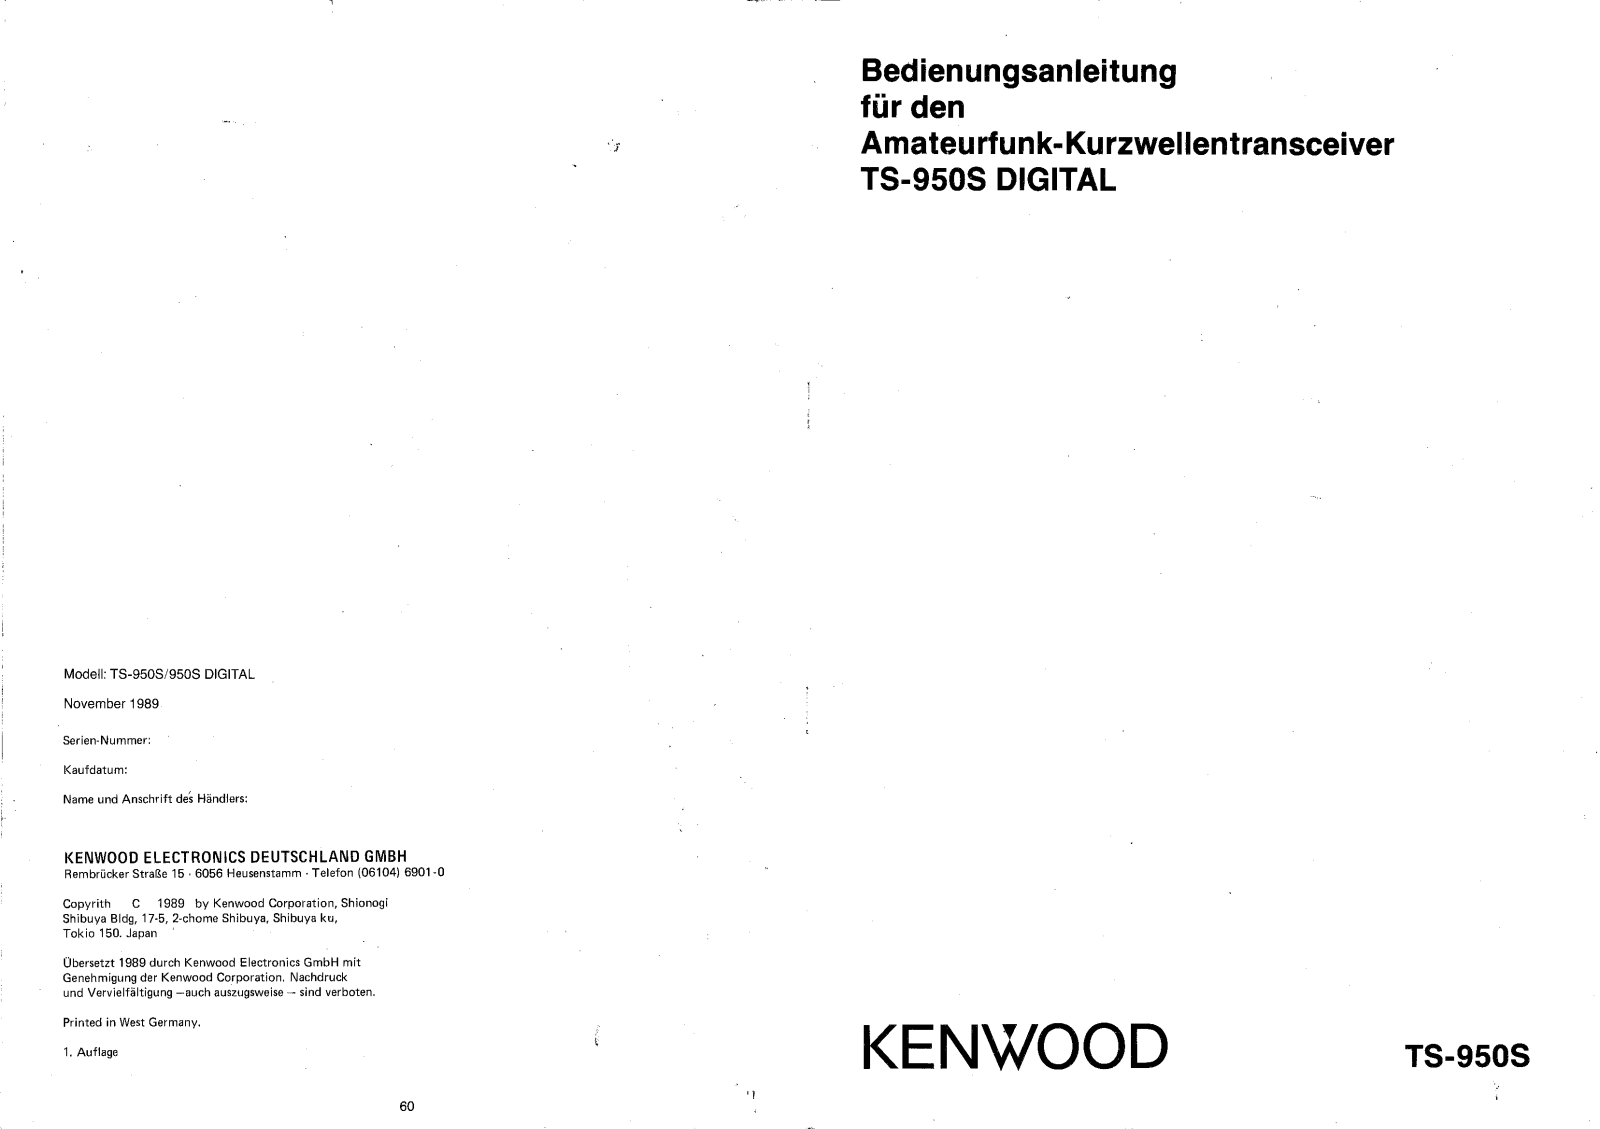 Kenwood TS-950S DIGITAL, ts 950sd User Manual